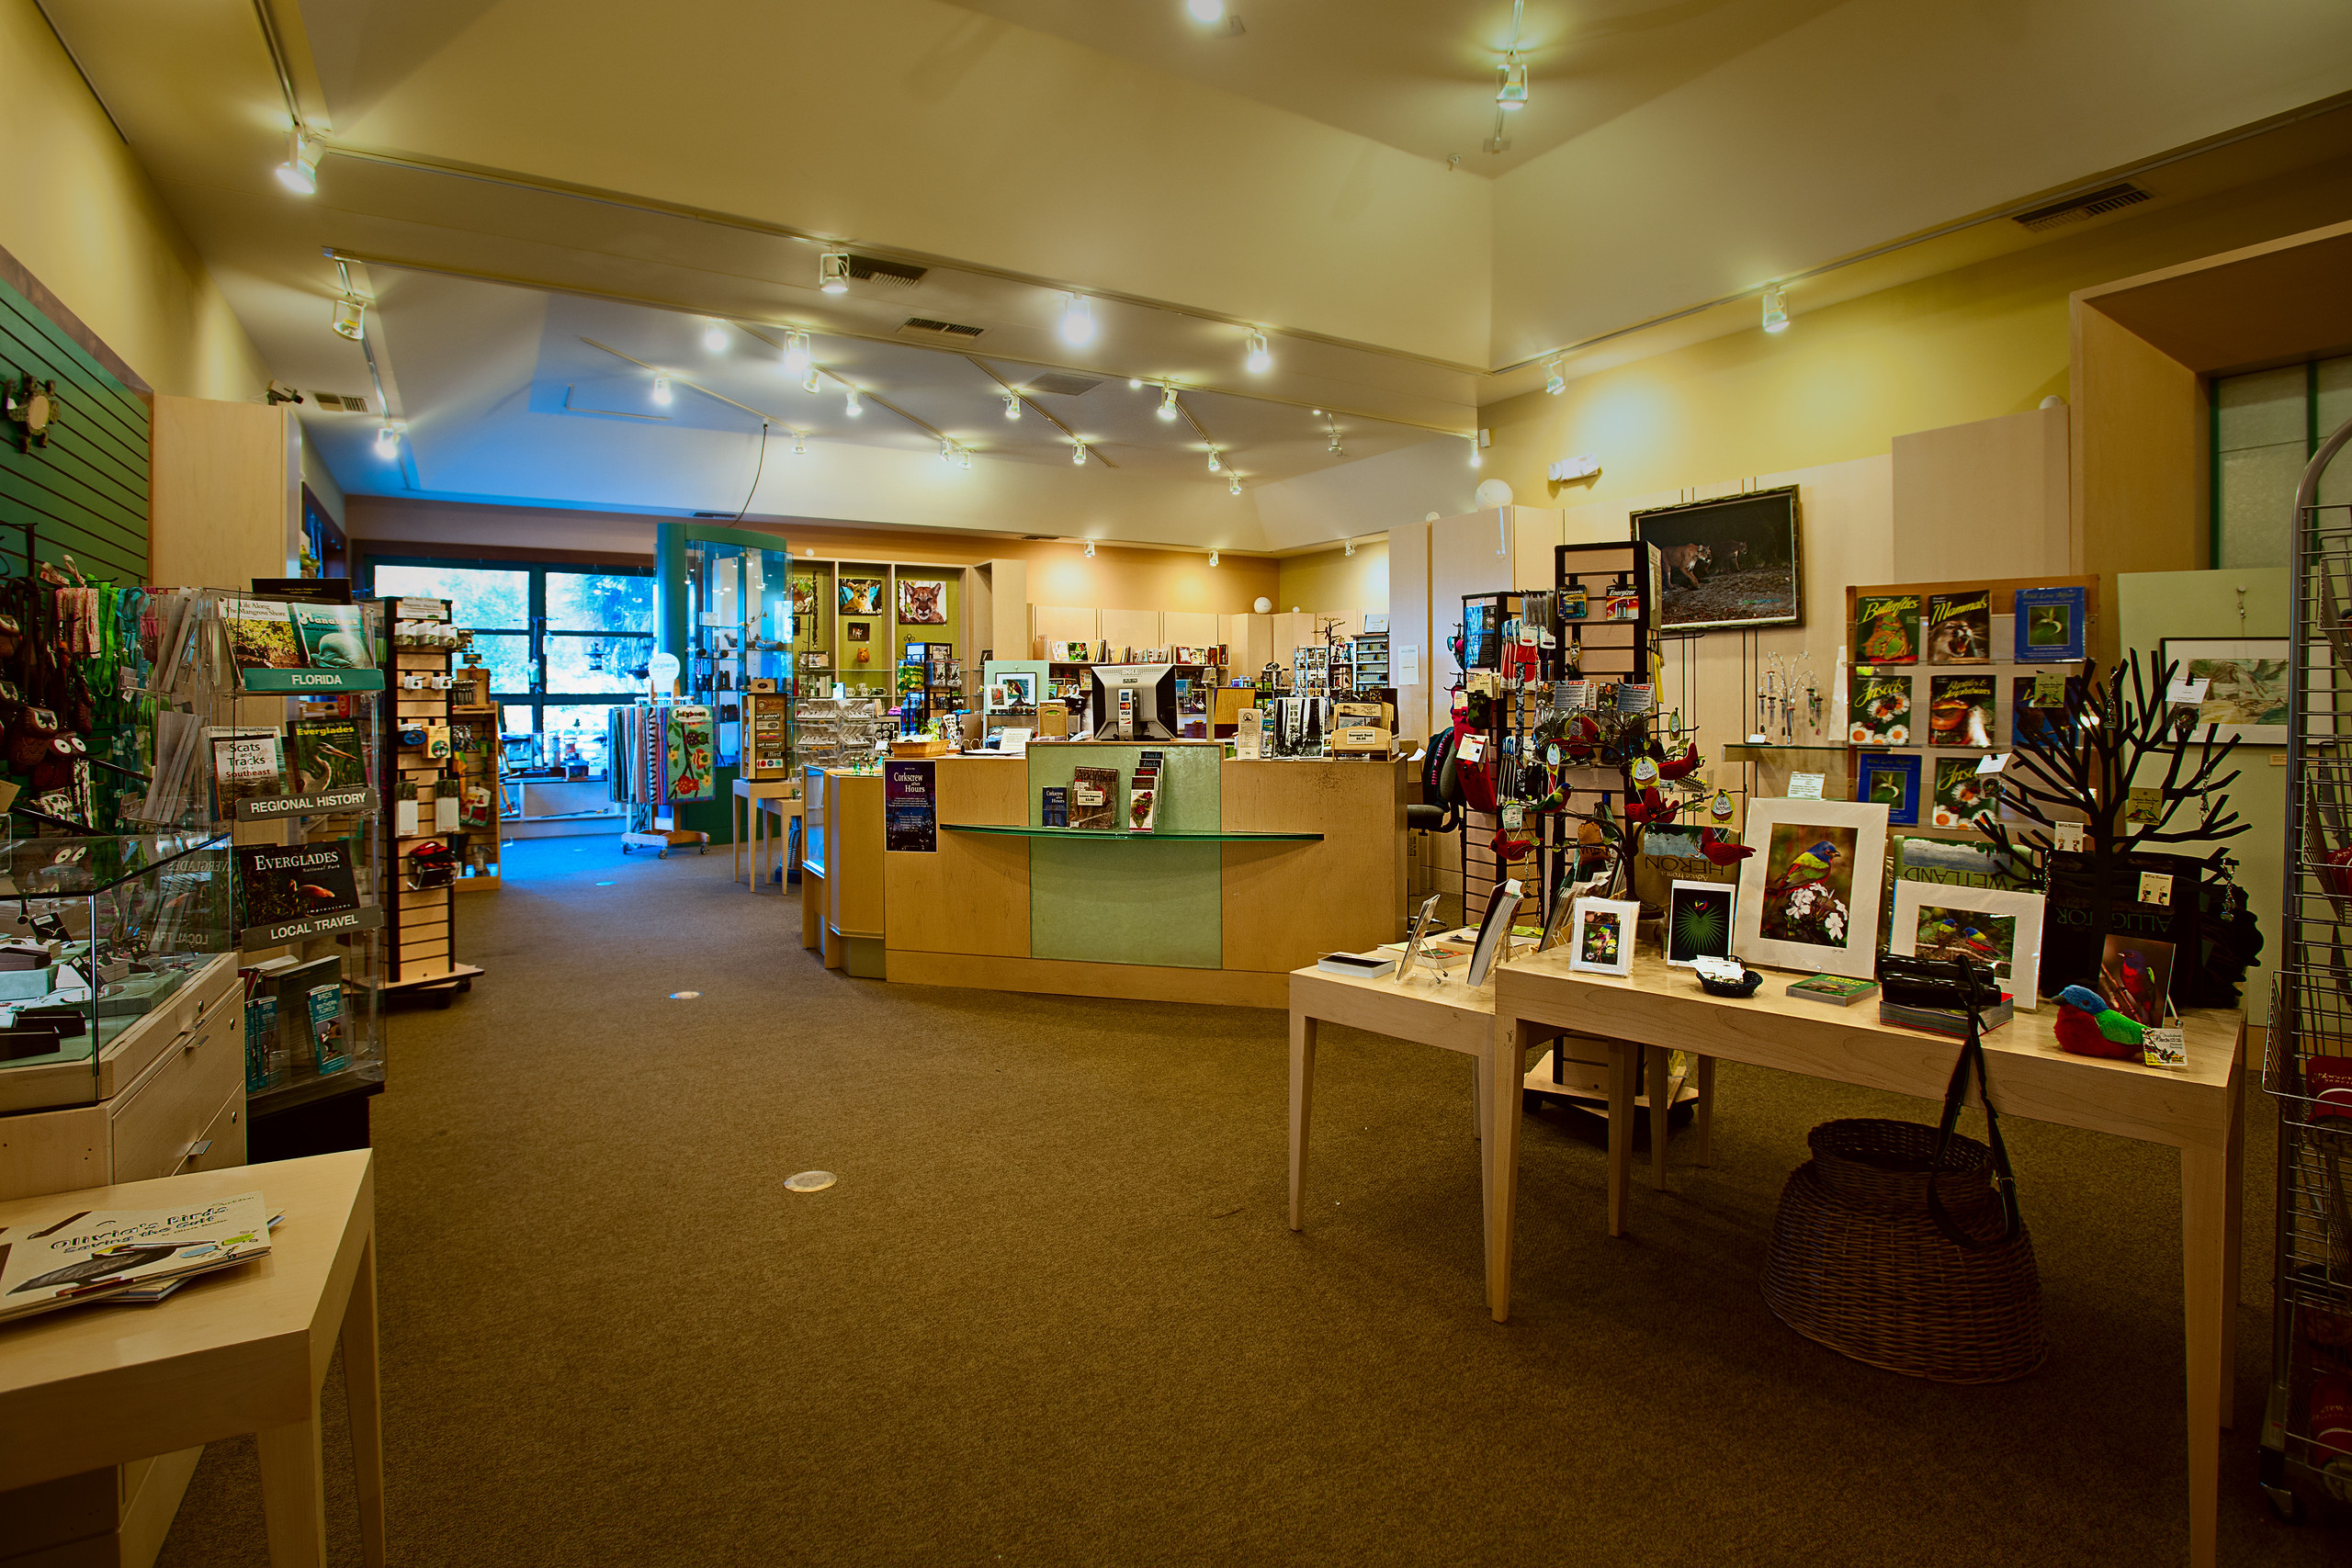 Blair Center Nature Store